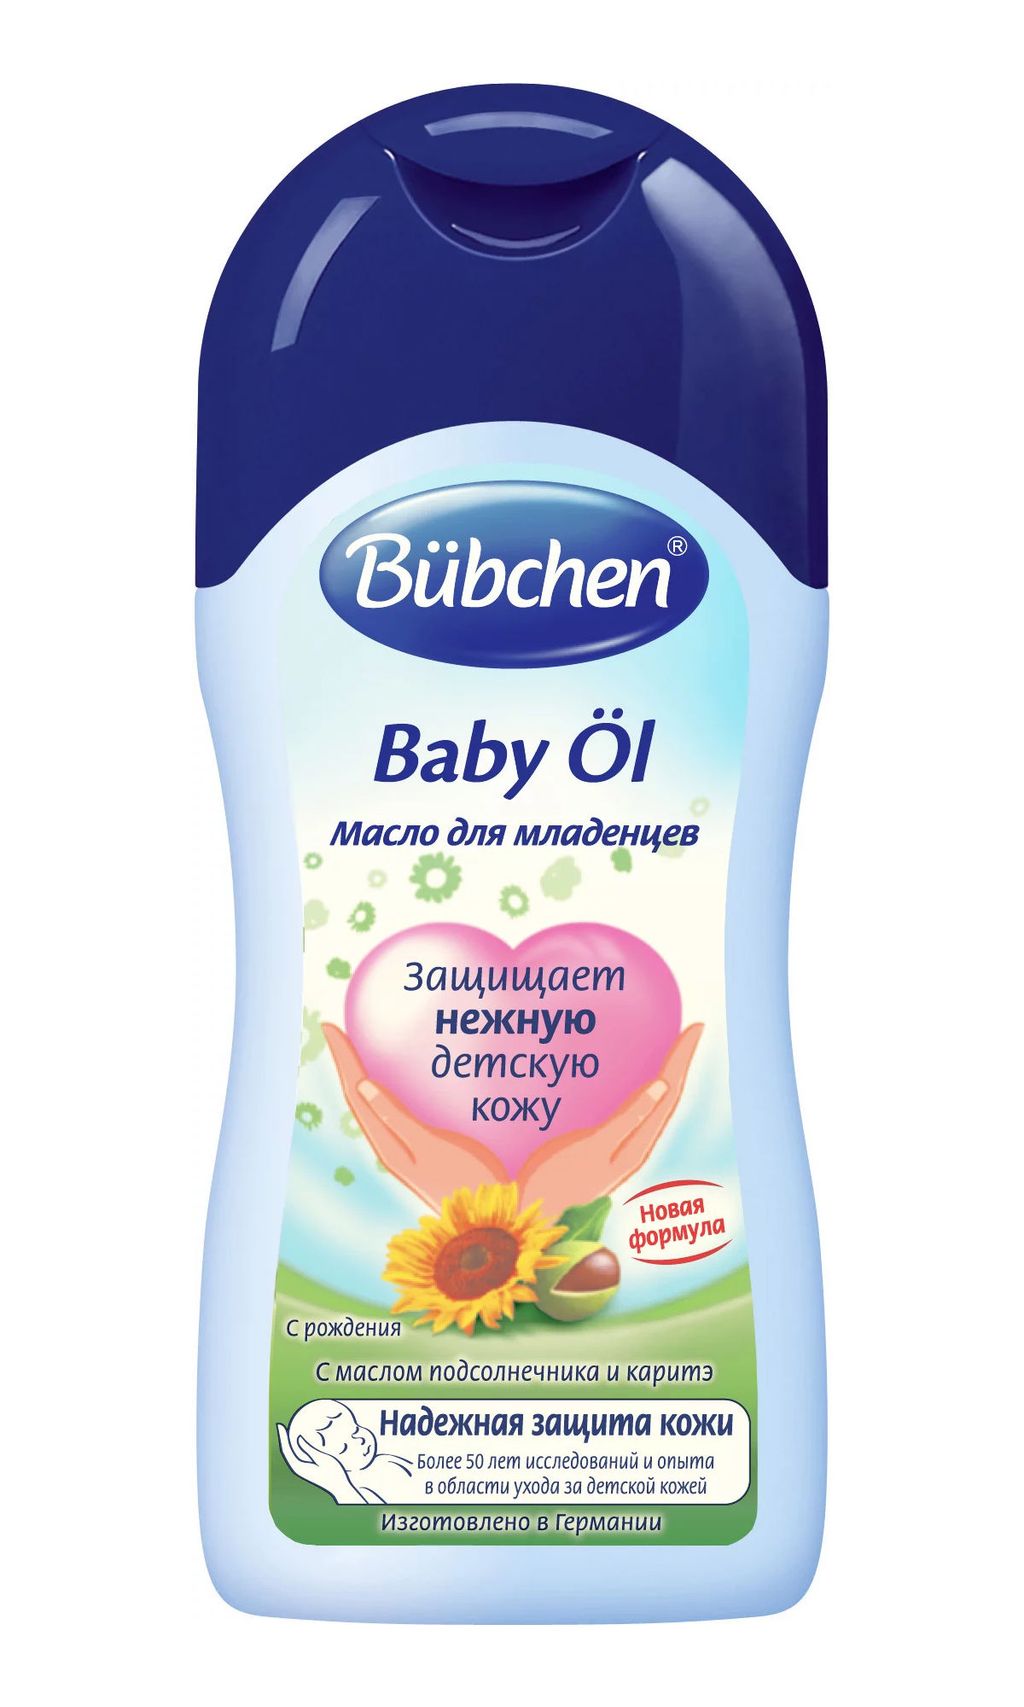 фото упаковки Bubchen Масло для младенцев